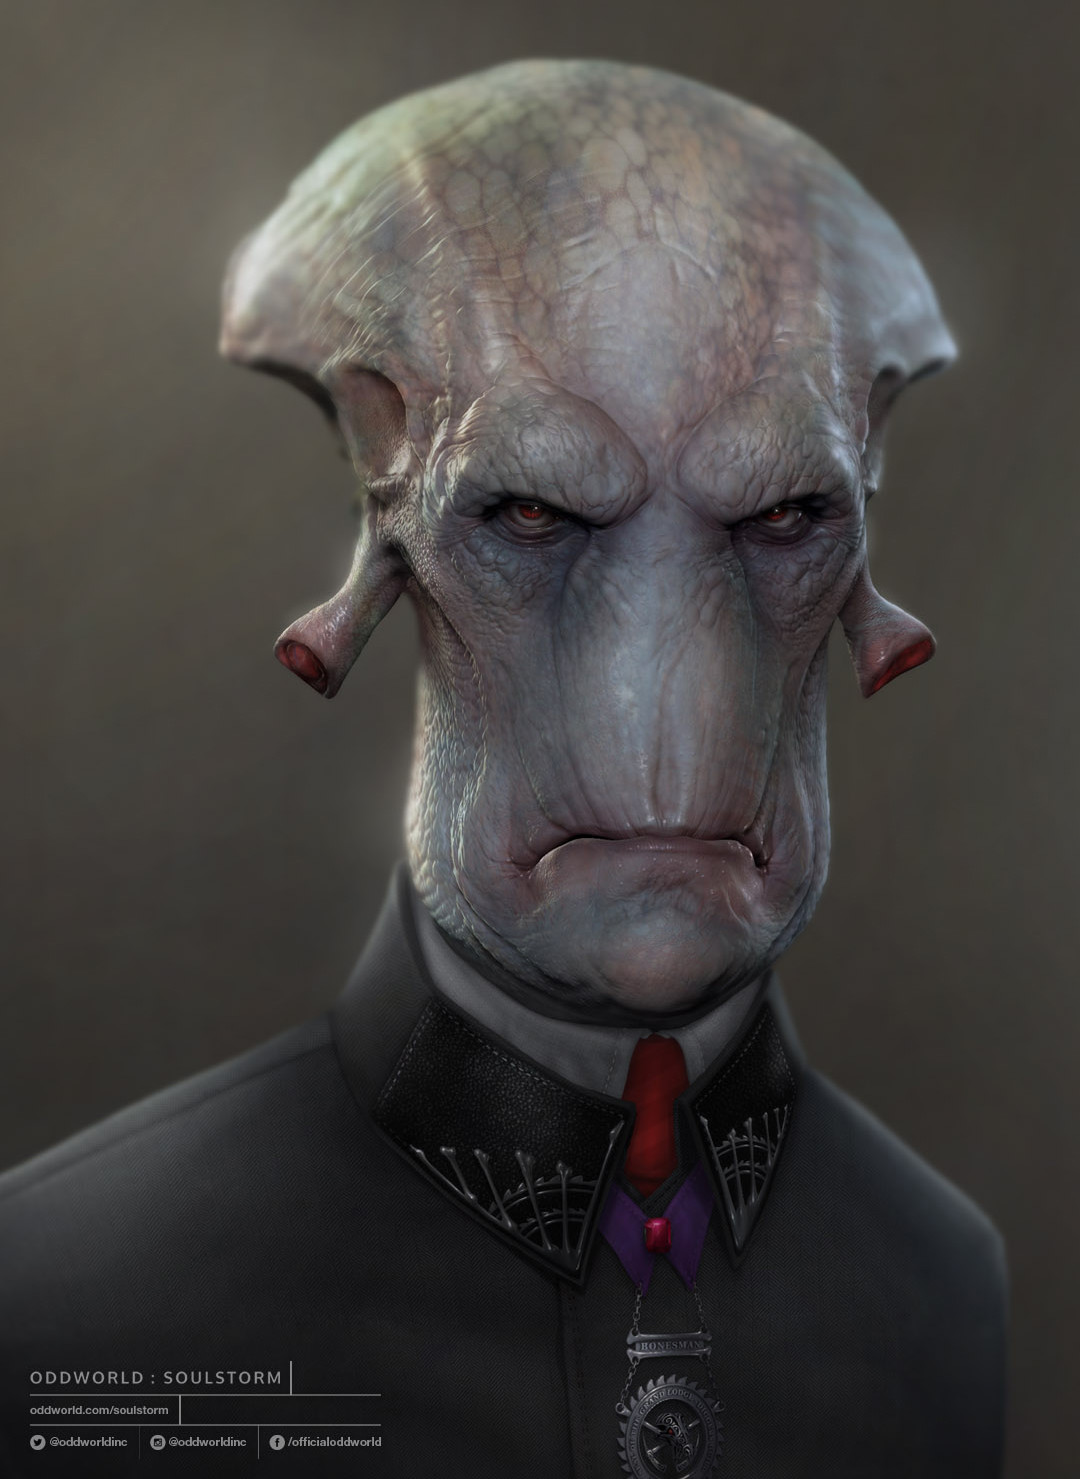 Oddworld Soulstorm character portraits, Glukkon 2